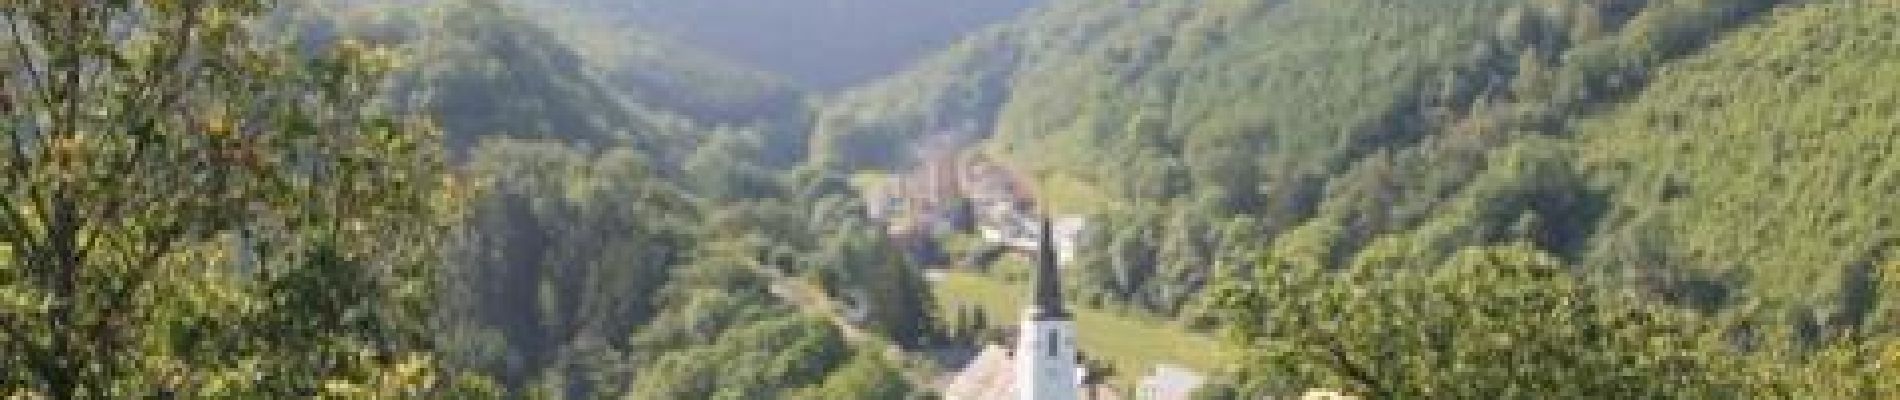 Randonnée Marche Kiischpelt - ESCAPARDENNE EISLECK TRAIL Etape 1 - Kautenbach - Clervaux - Photo